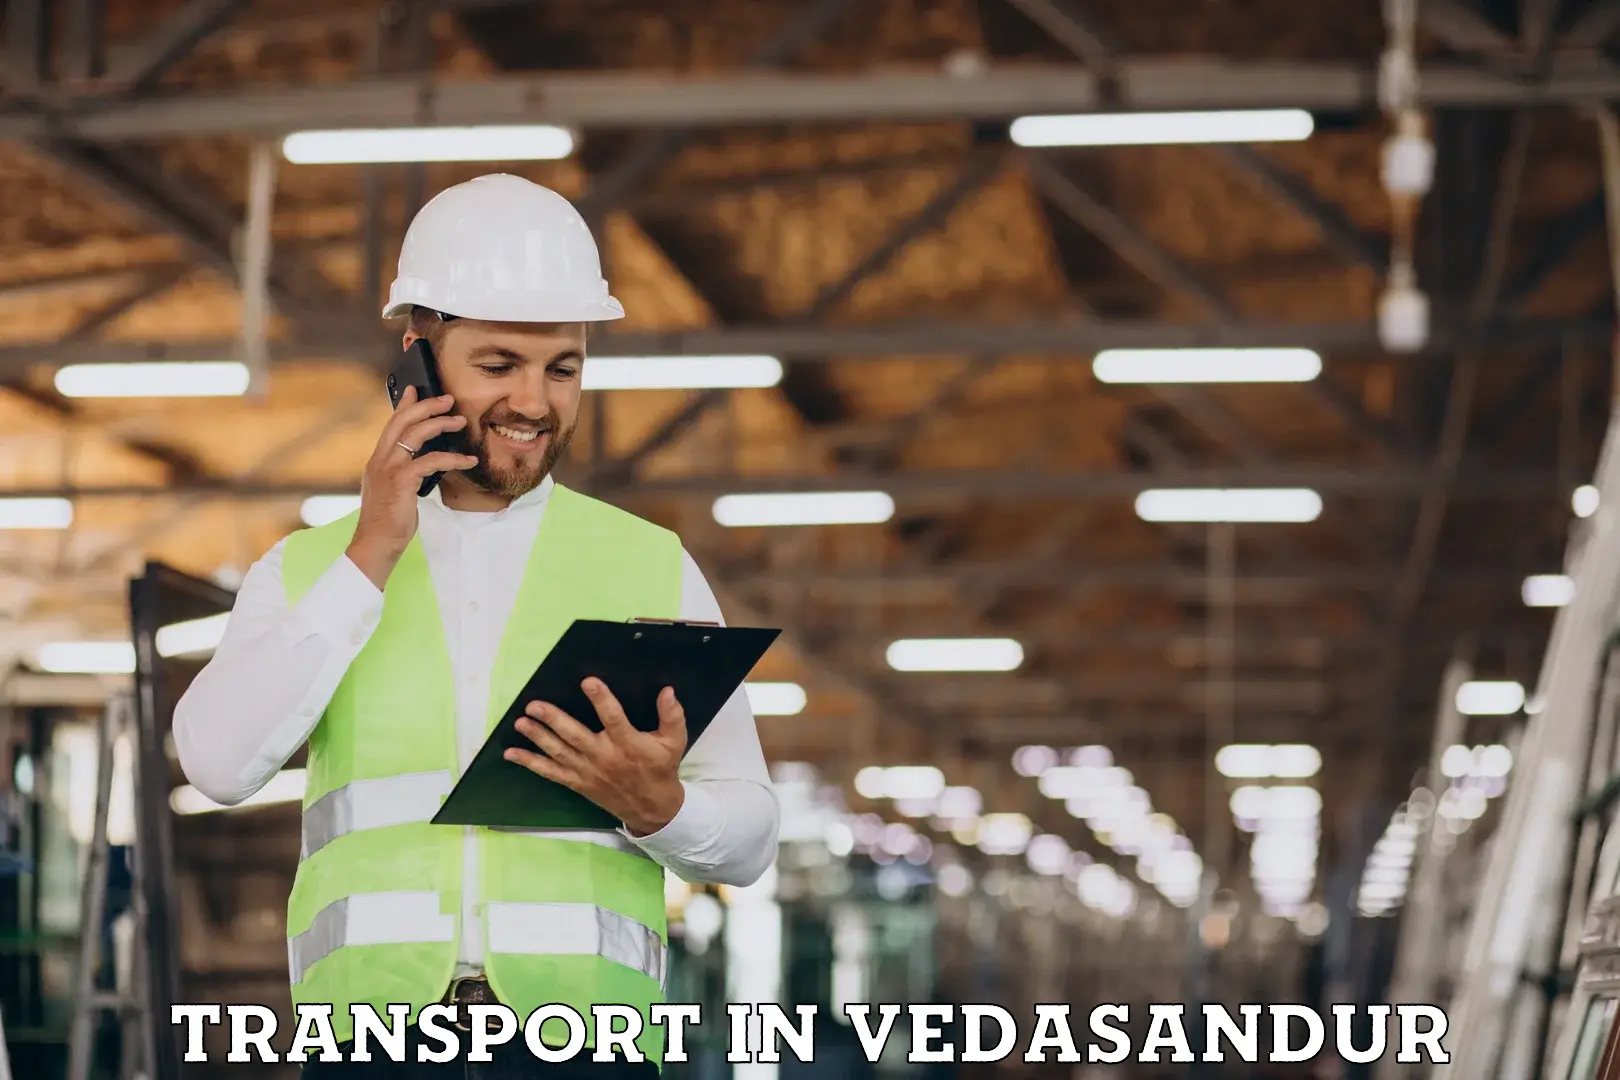 Nearest transport service in Vedasandur